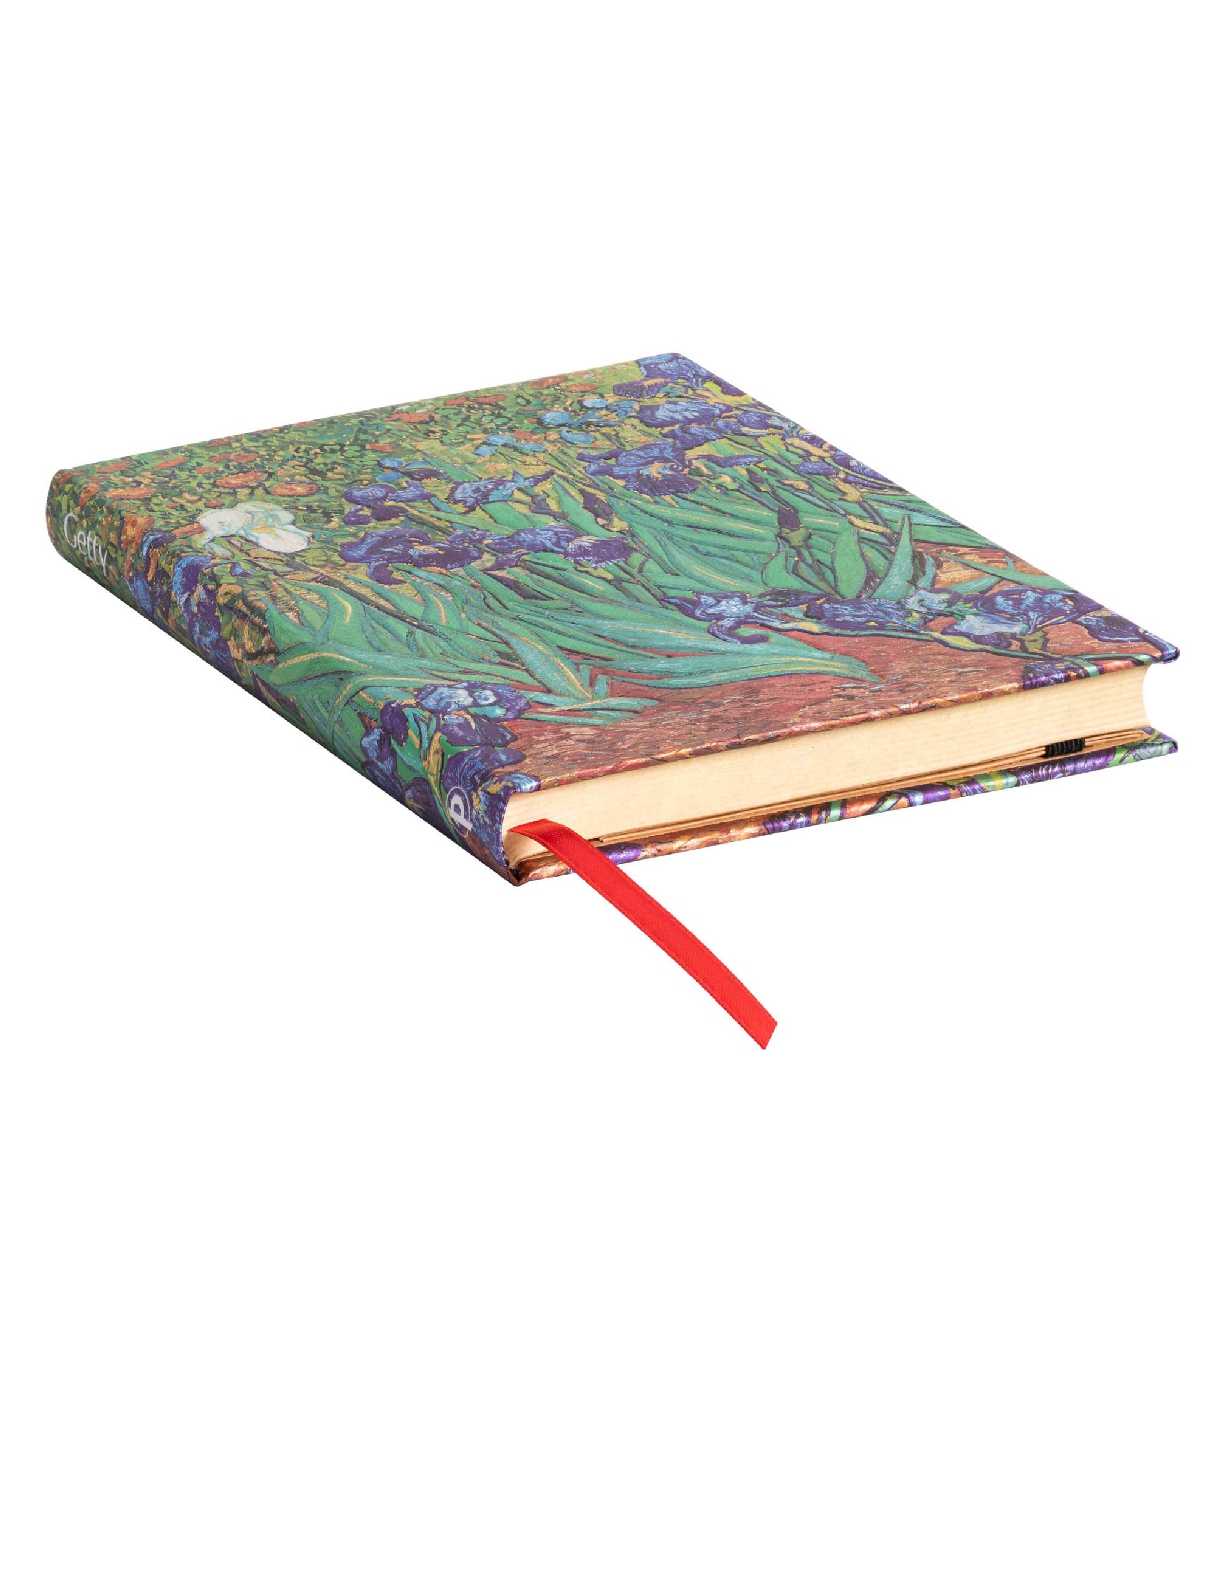 Van Gogh's Irises, Hardcover, Midi, Lined, Elastic Band Closure, 144 Pg, 120 GSM